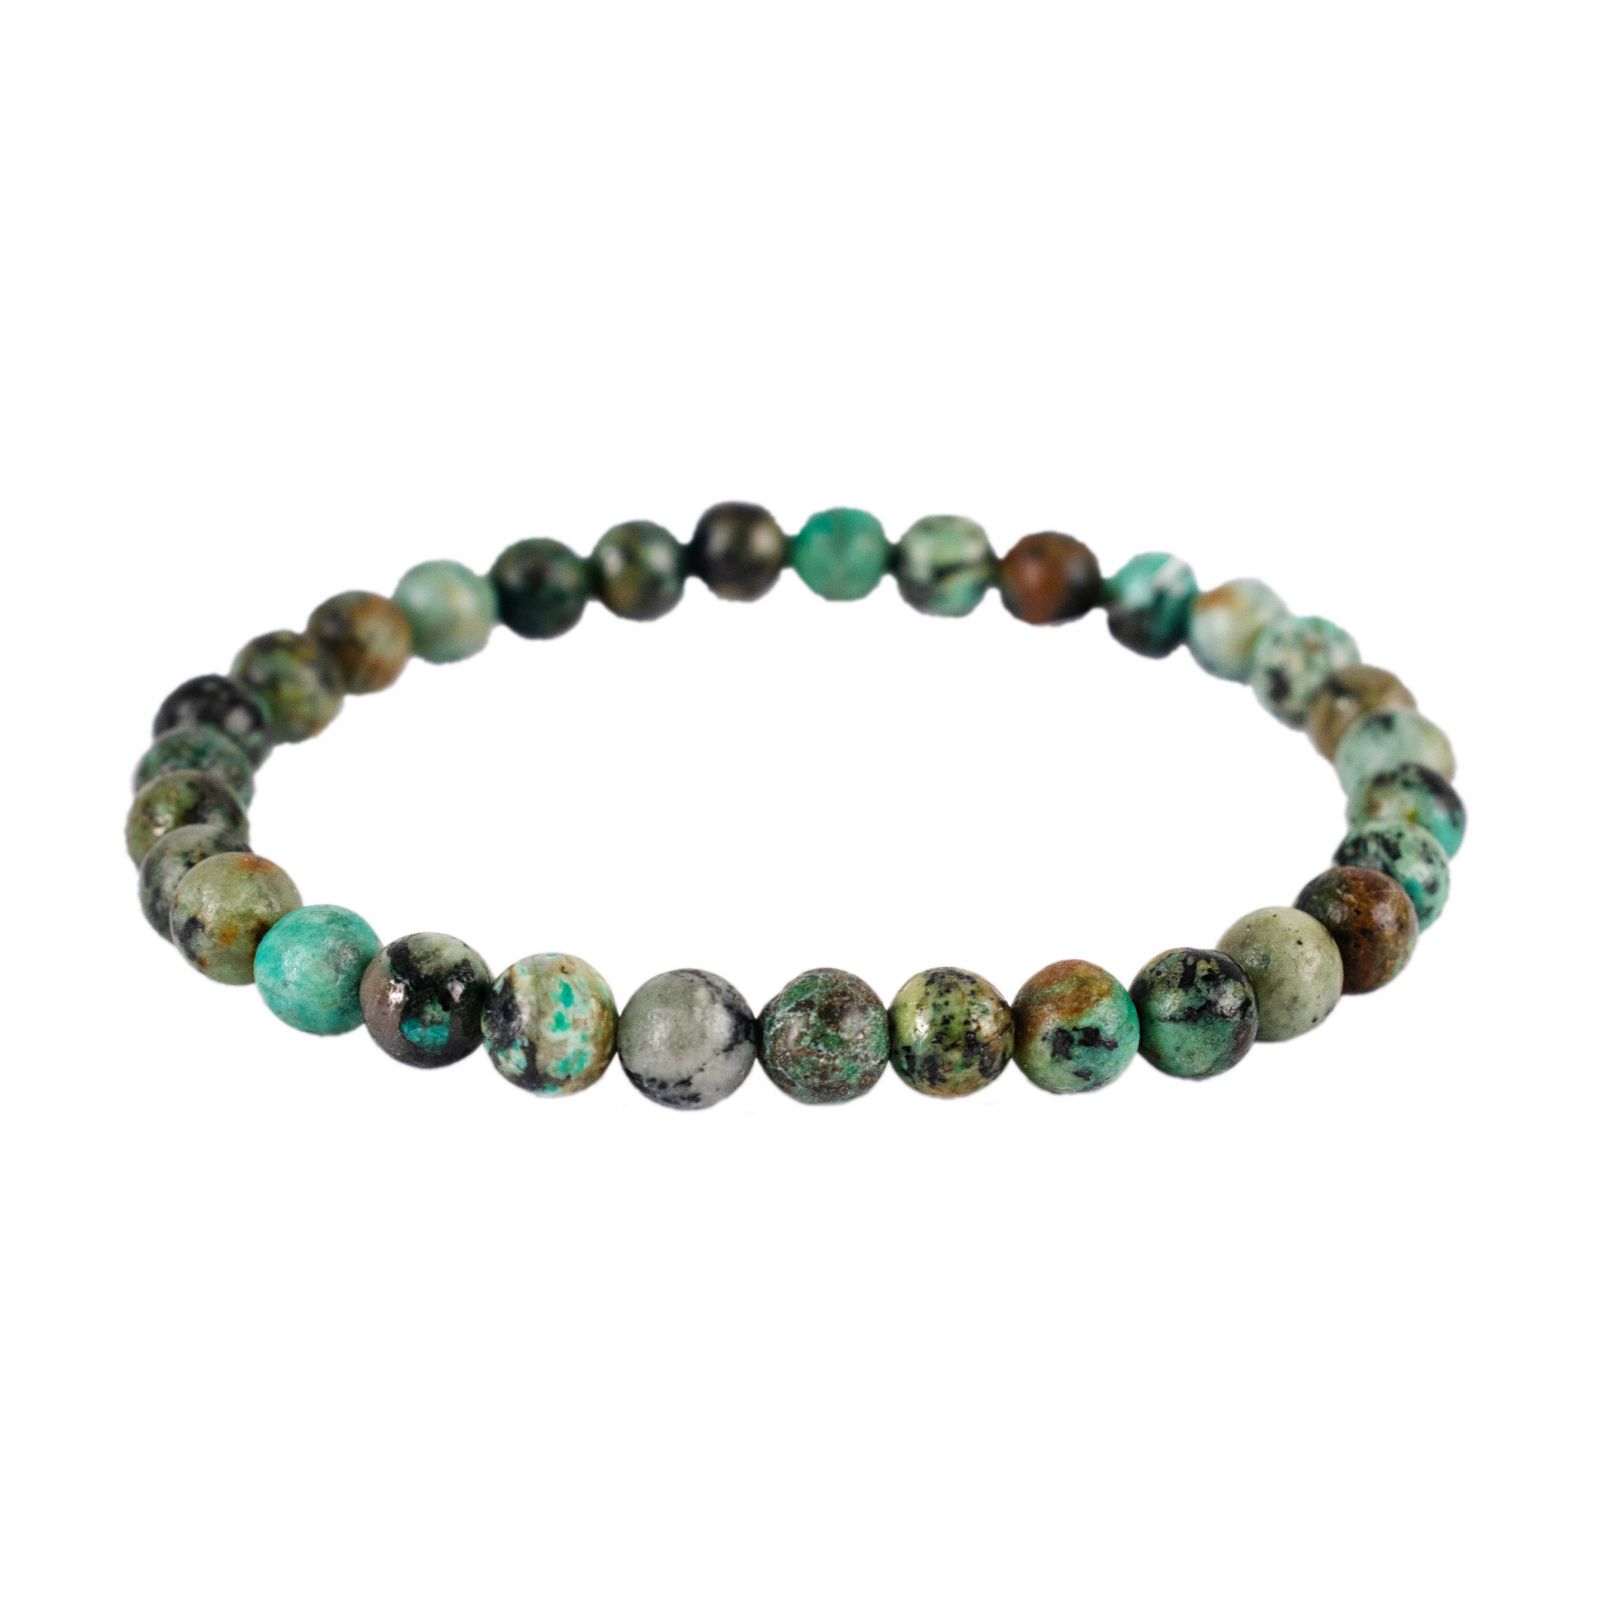 African turquoise bead bracelet Thailand